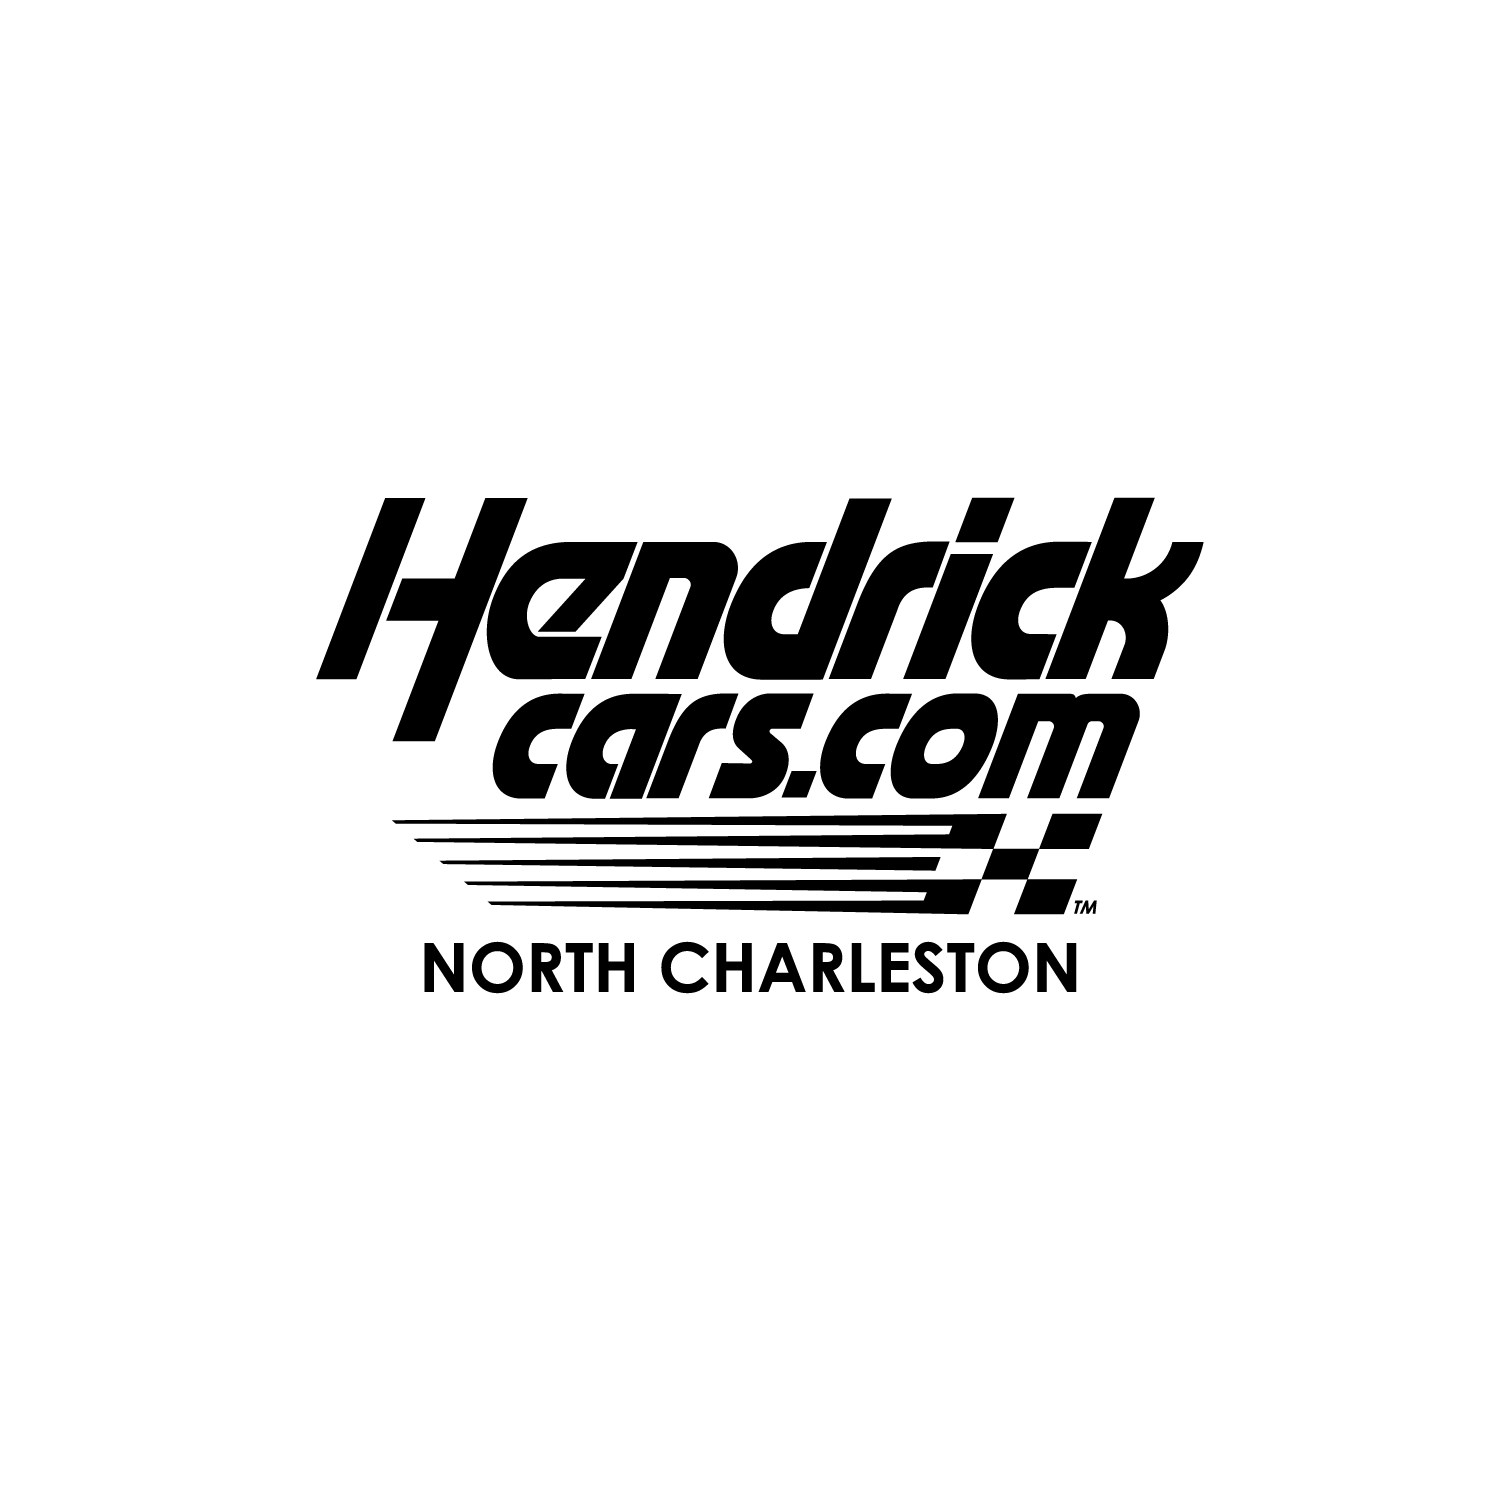 Hendrickcars.com North Charleston Photo